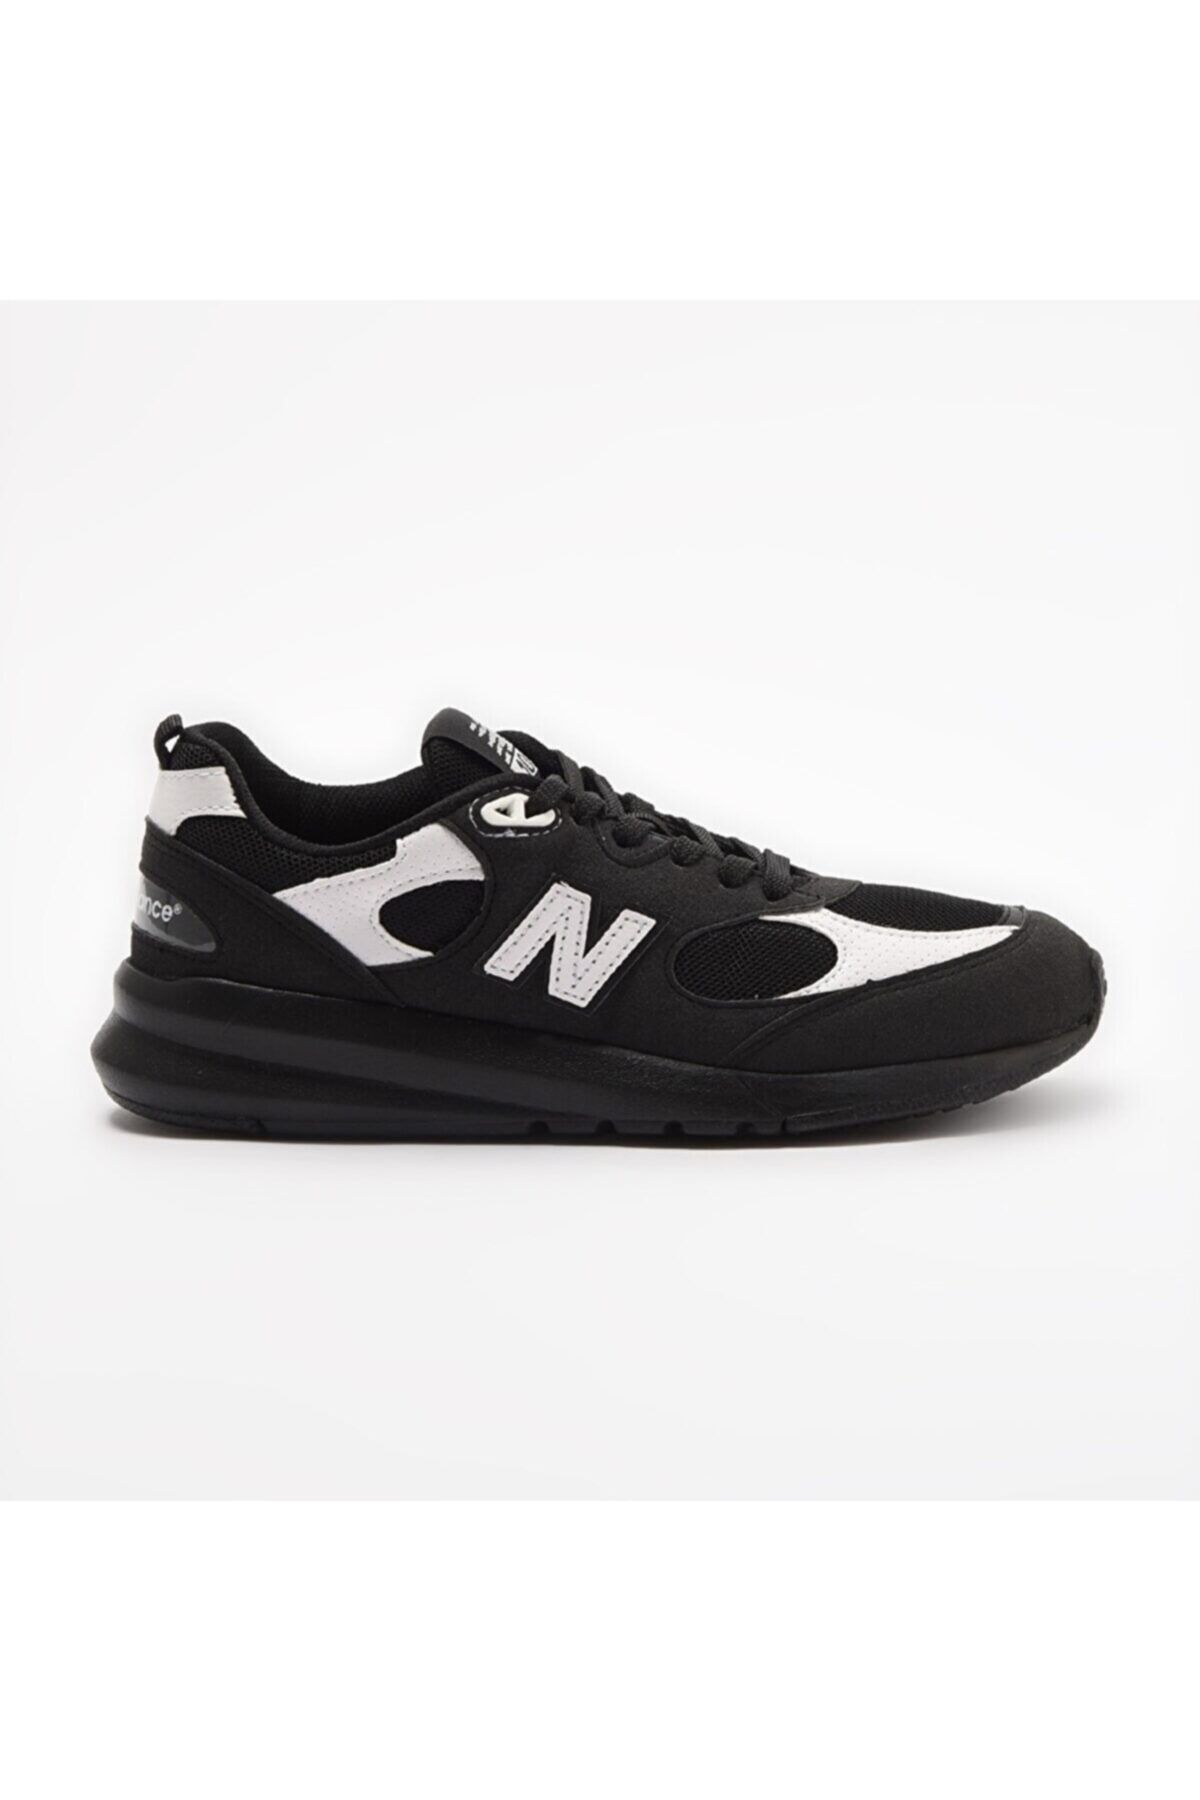 New Balance Nb Lifestyle Womens Shoes Siyah Beyaz Günlük Ayakkabı - Ws109bss